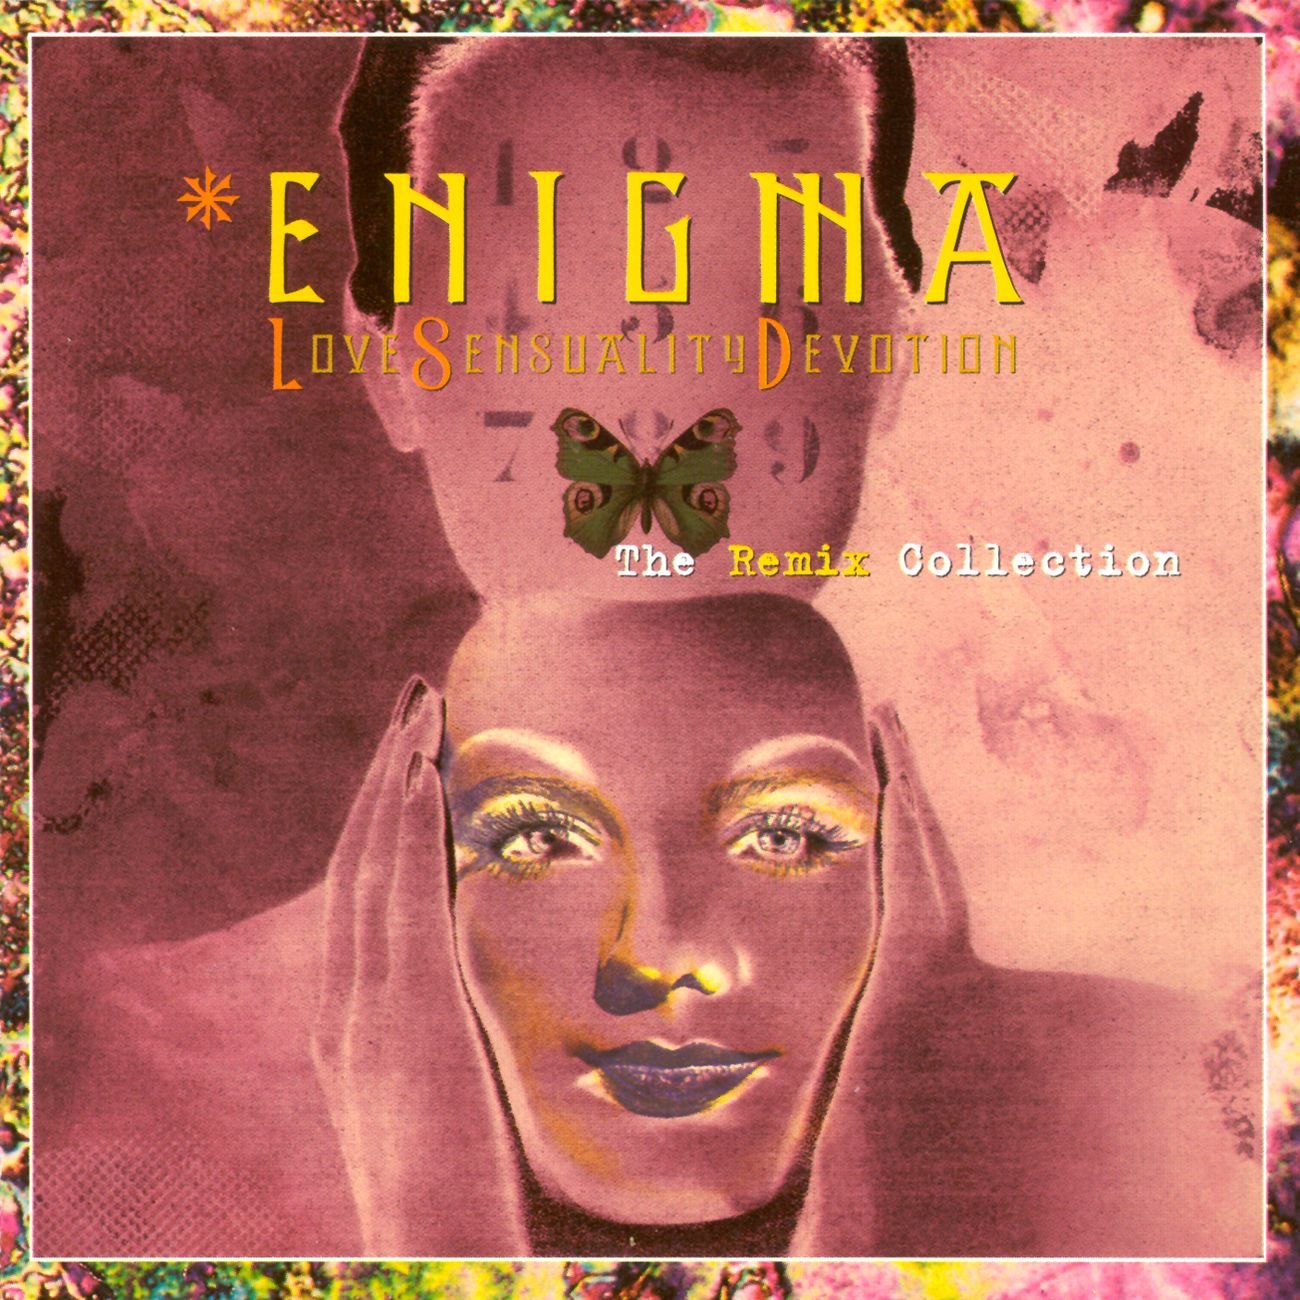 Lsd - Love Sensuality Devotion (The Remix Collection) — Enigma | Last.fm